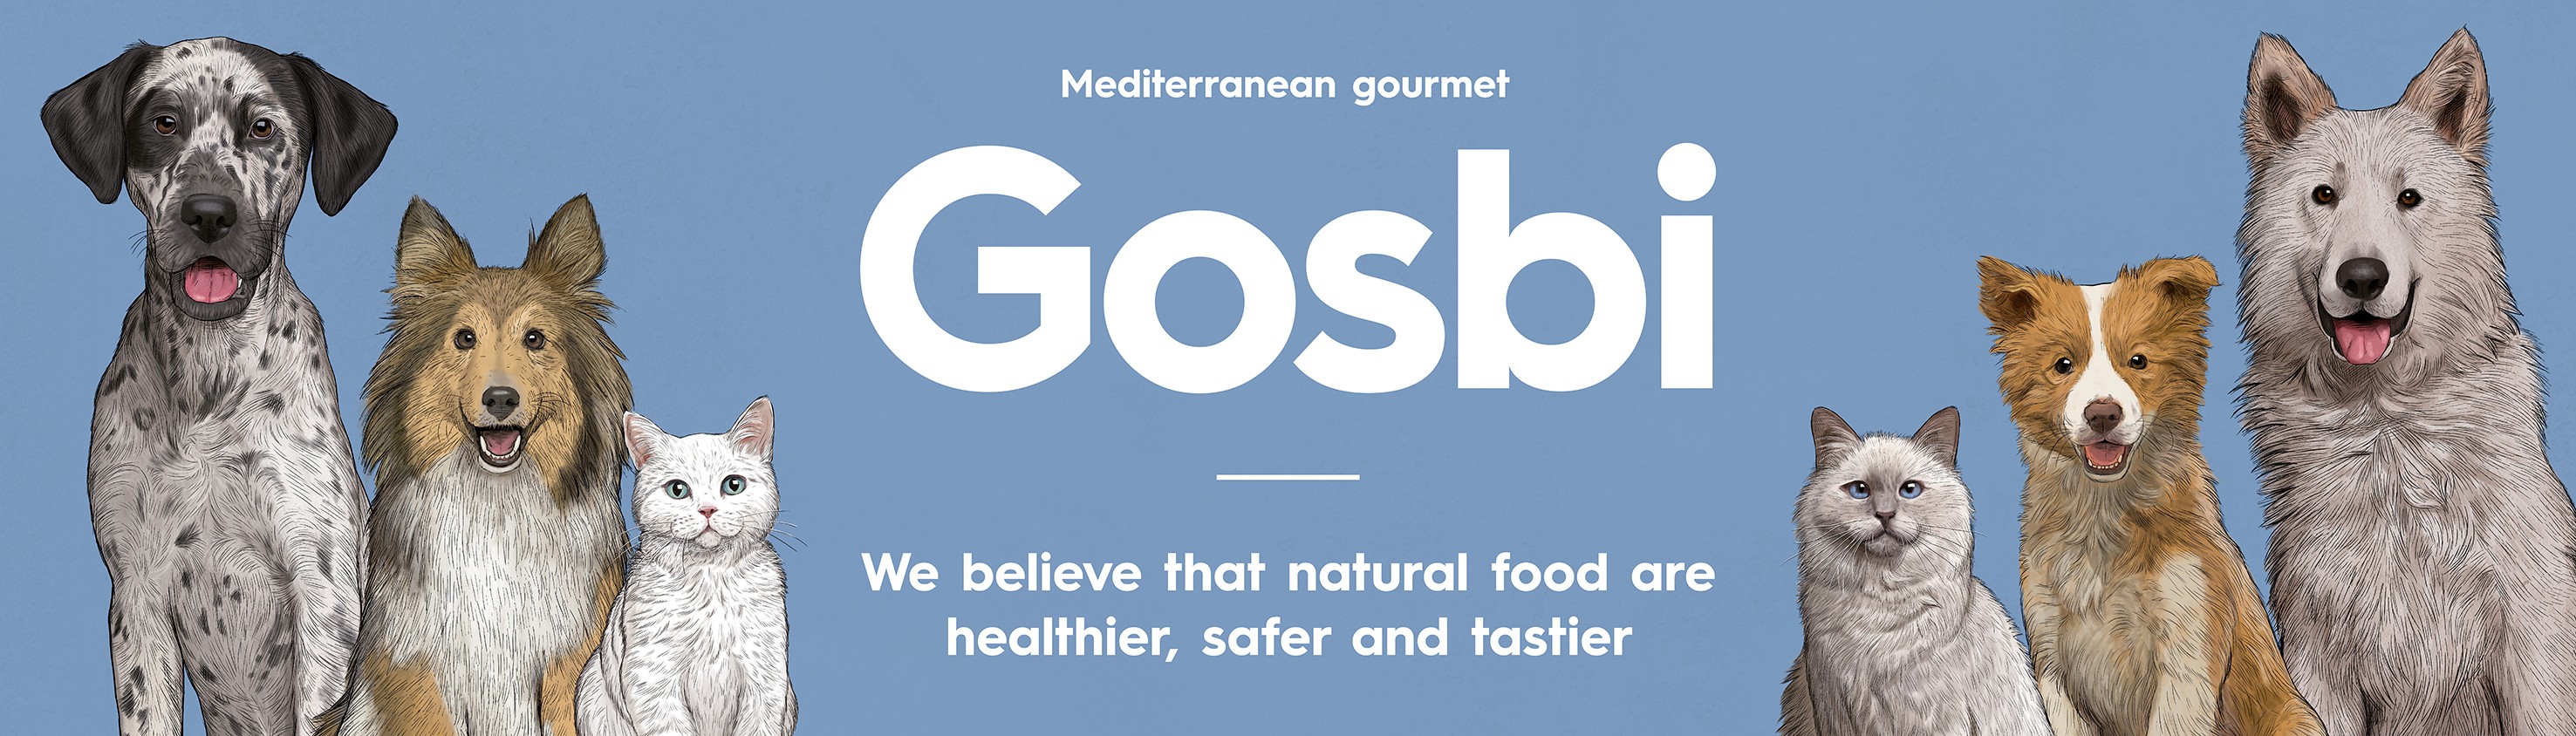 Gosbi Mediterranean Gourmet